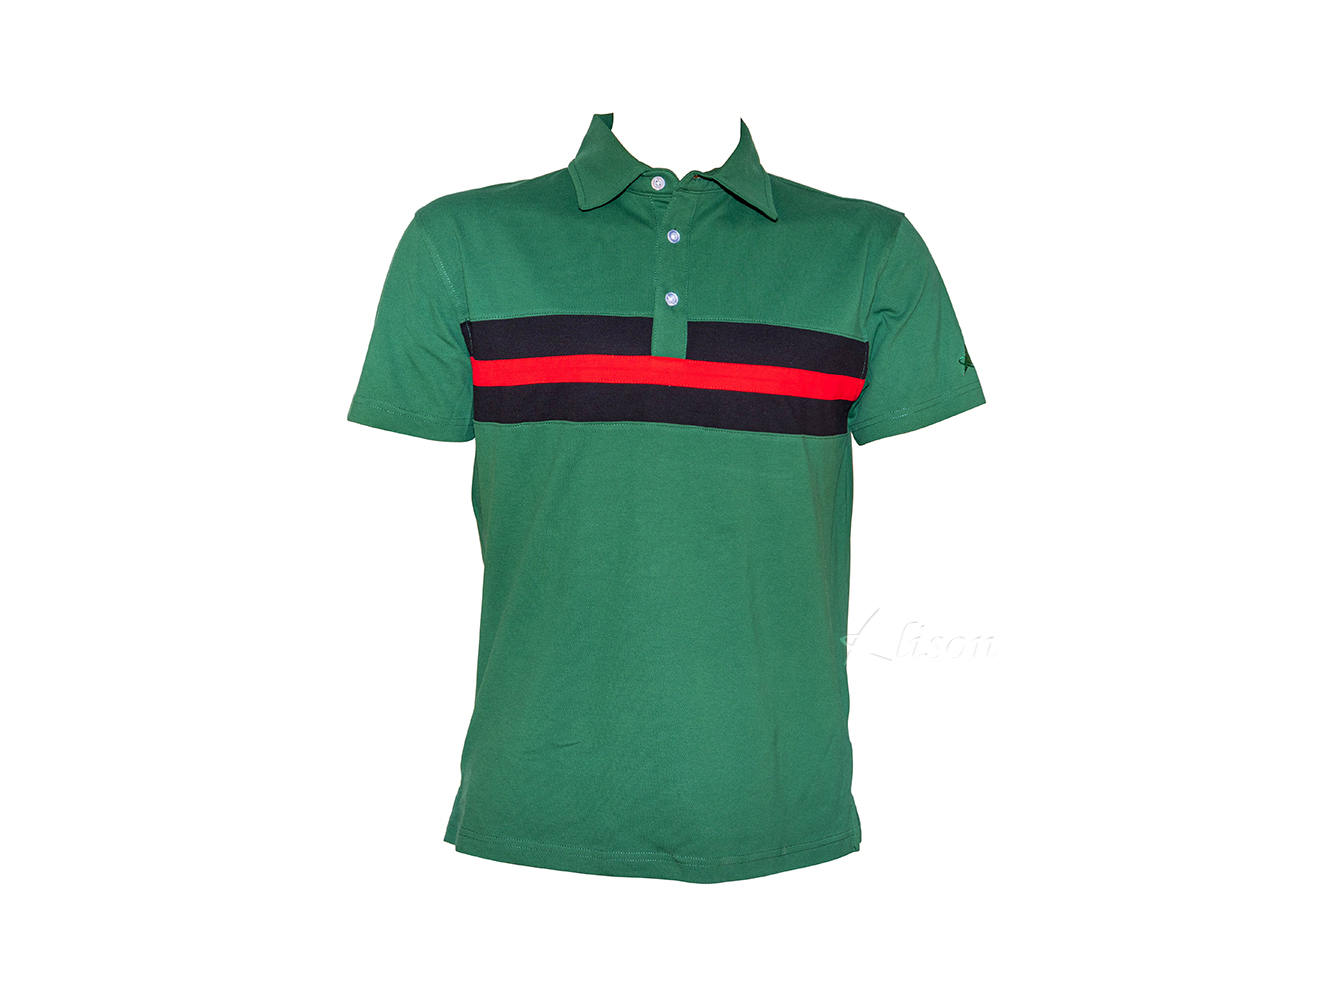 FA005 Hemingway Pilar Green w. Black & Red Stripes Regular Fit Polo Shirt by Alison Nautical fa005-hemingway-pilar-green-w-black-red-stripes-regular-fit-polo-shirt-by-alison-nautical-l01.jpg